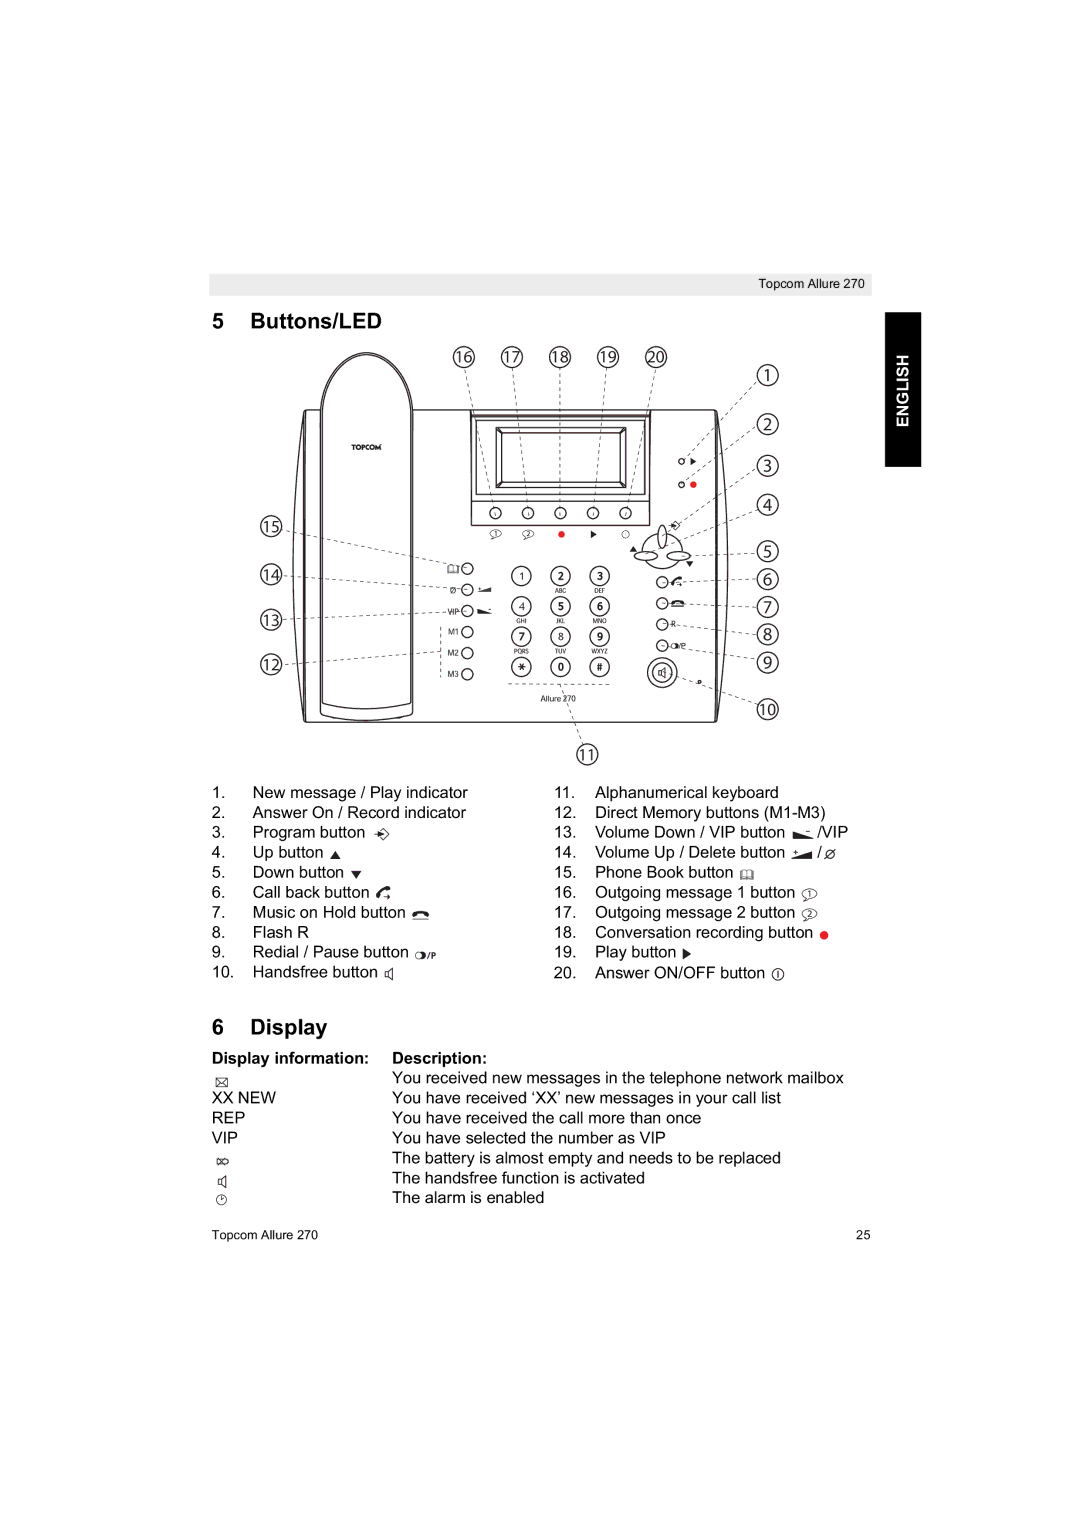 Topcom 270 manual Buttons/LED, Display information Description 